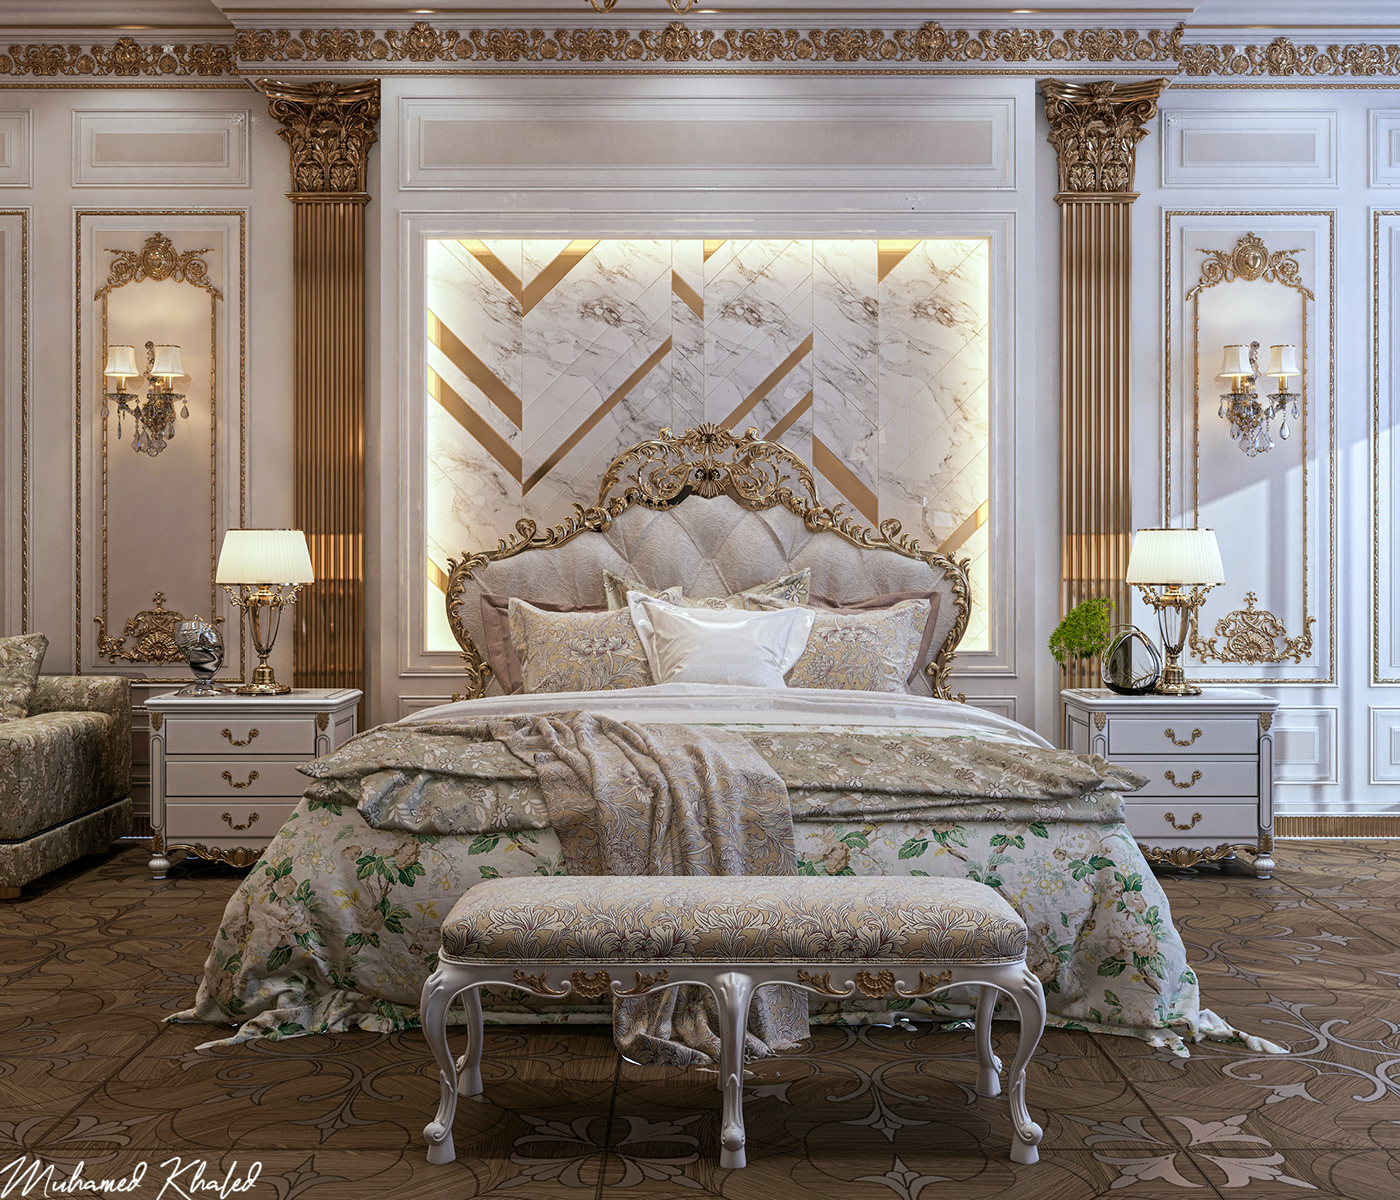 Classic Bedroom Design on Behance